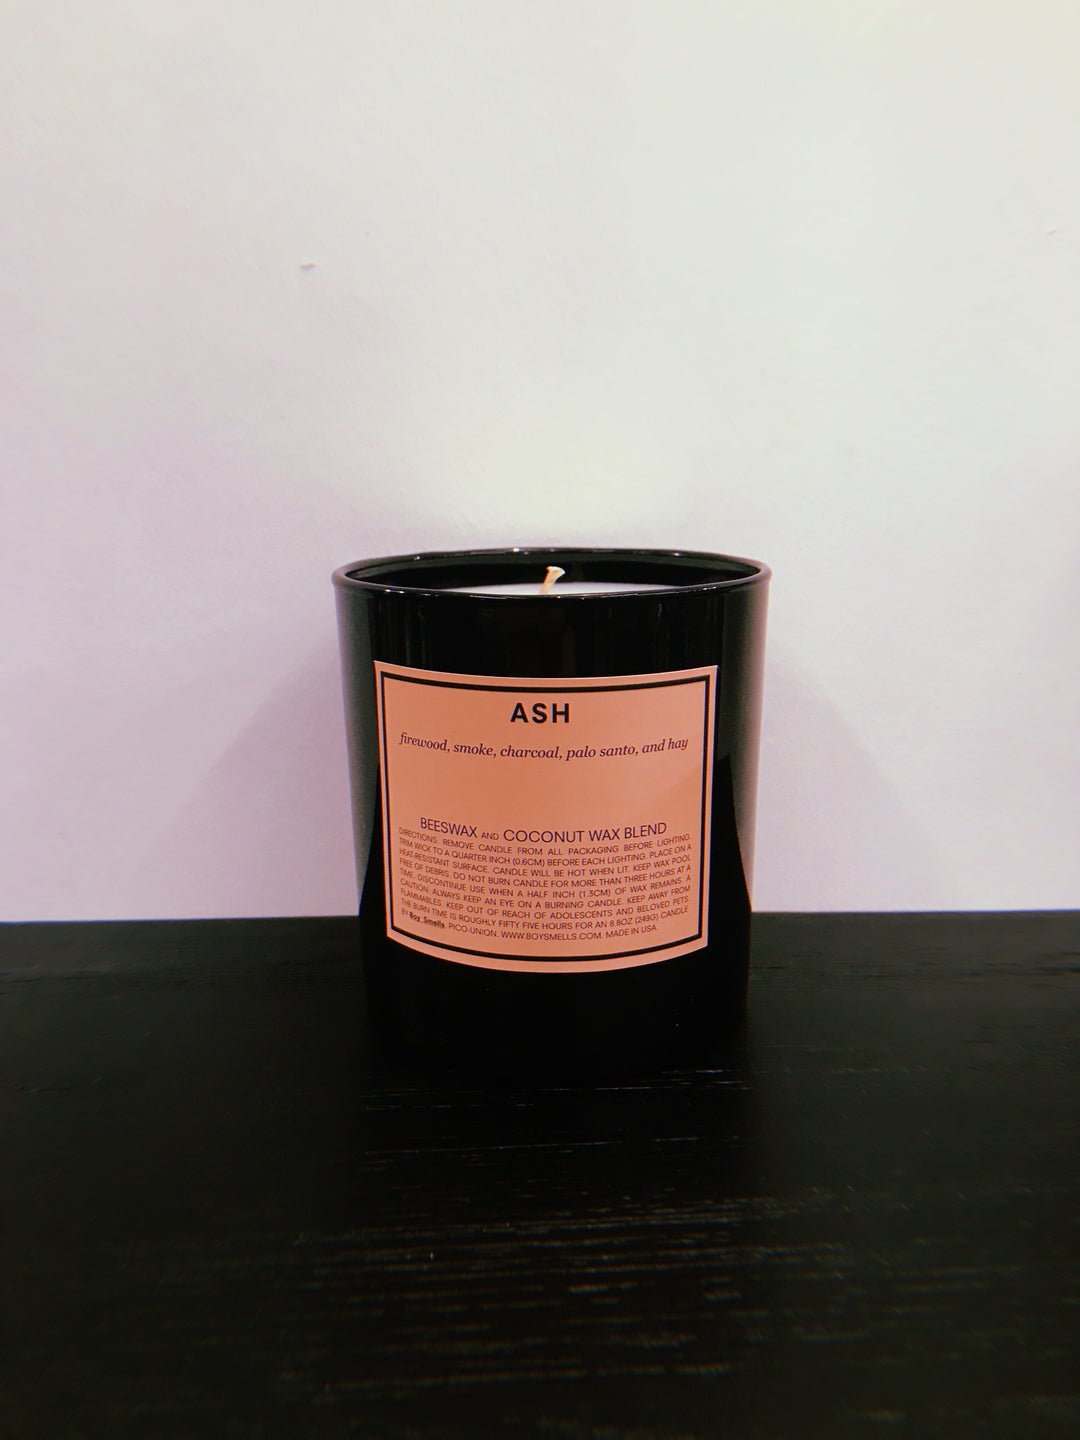 Twentyseven Toronto - Boy Smells - Ash Candle